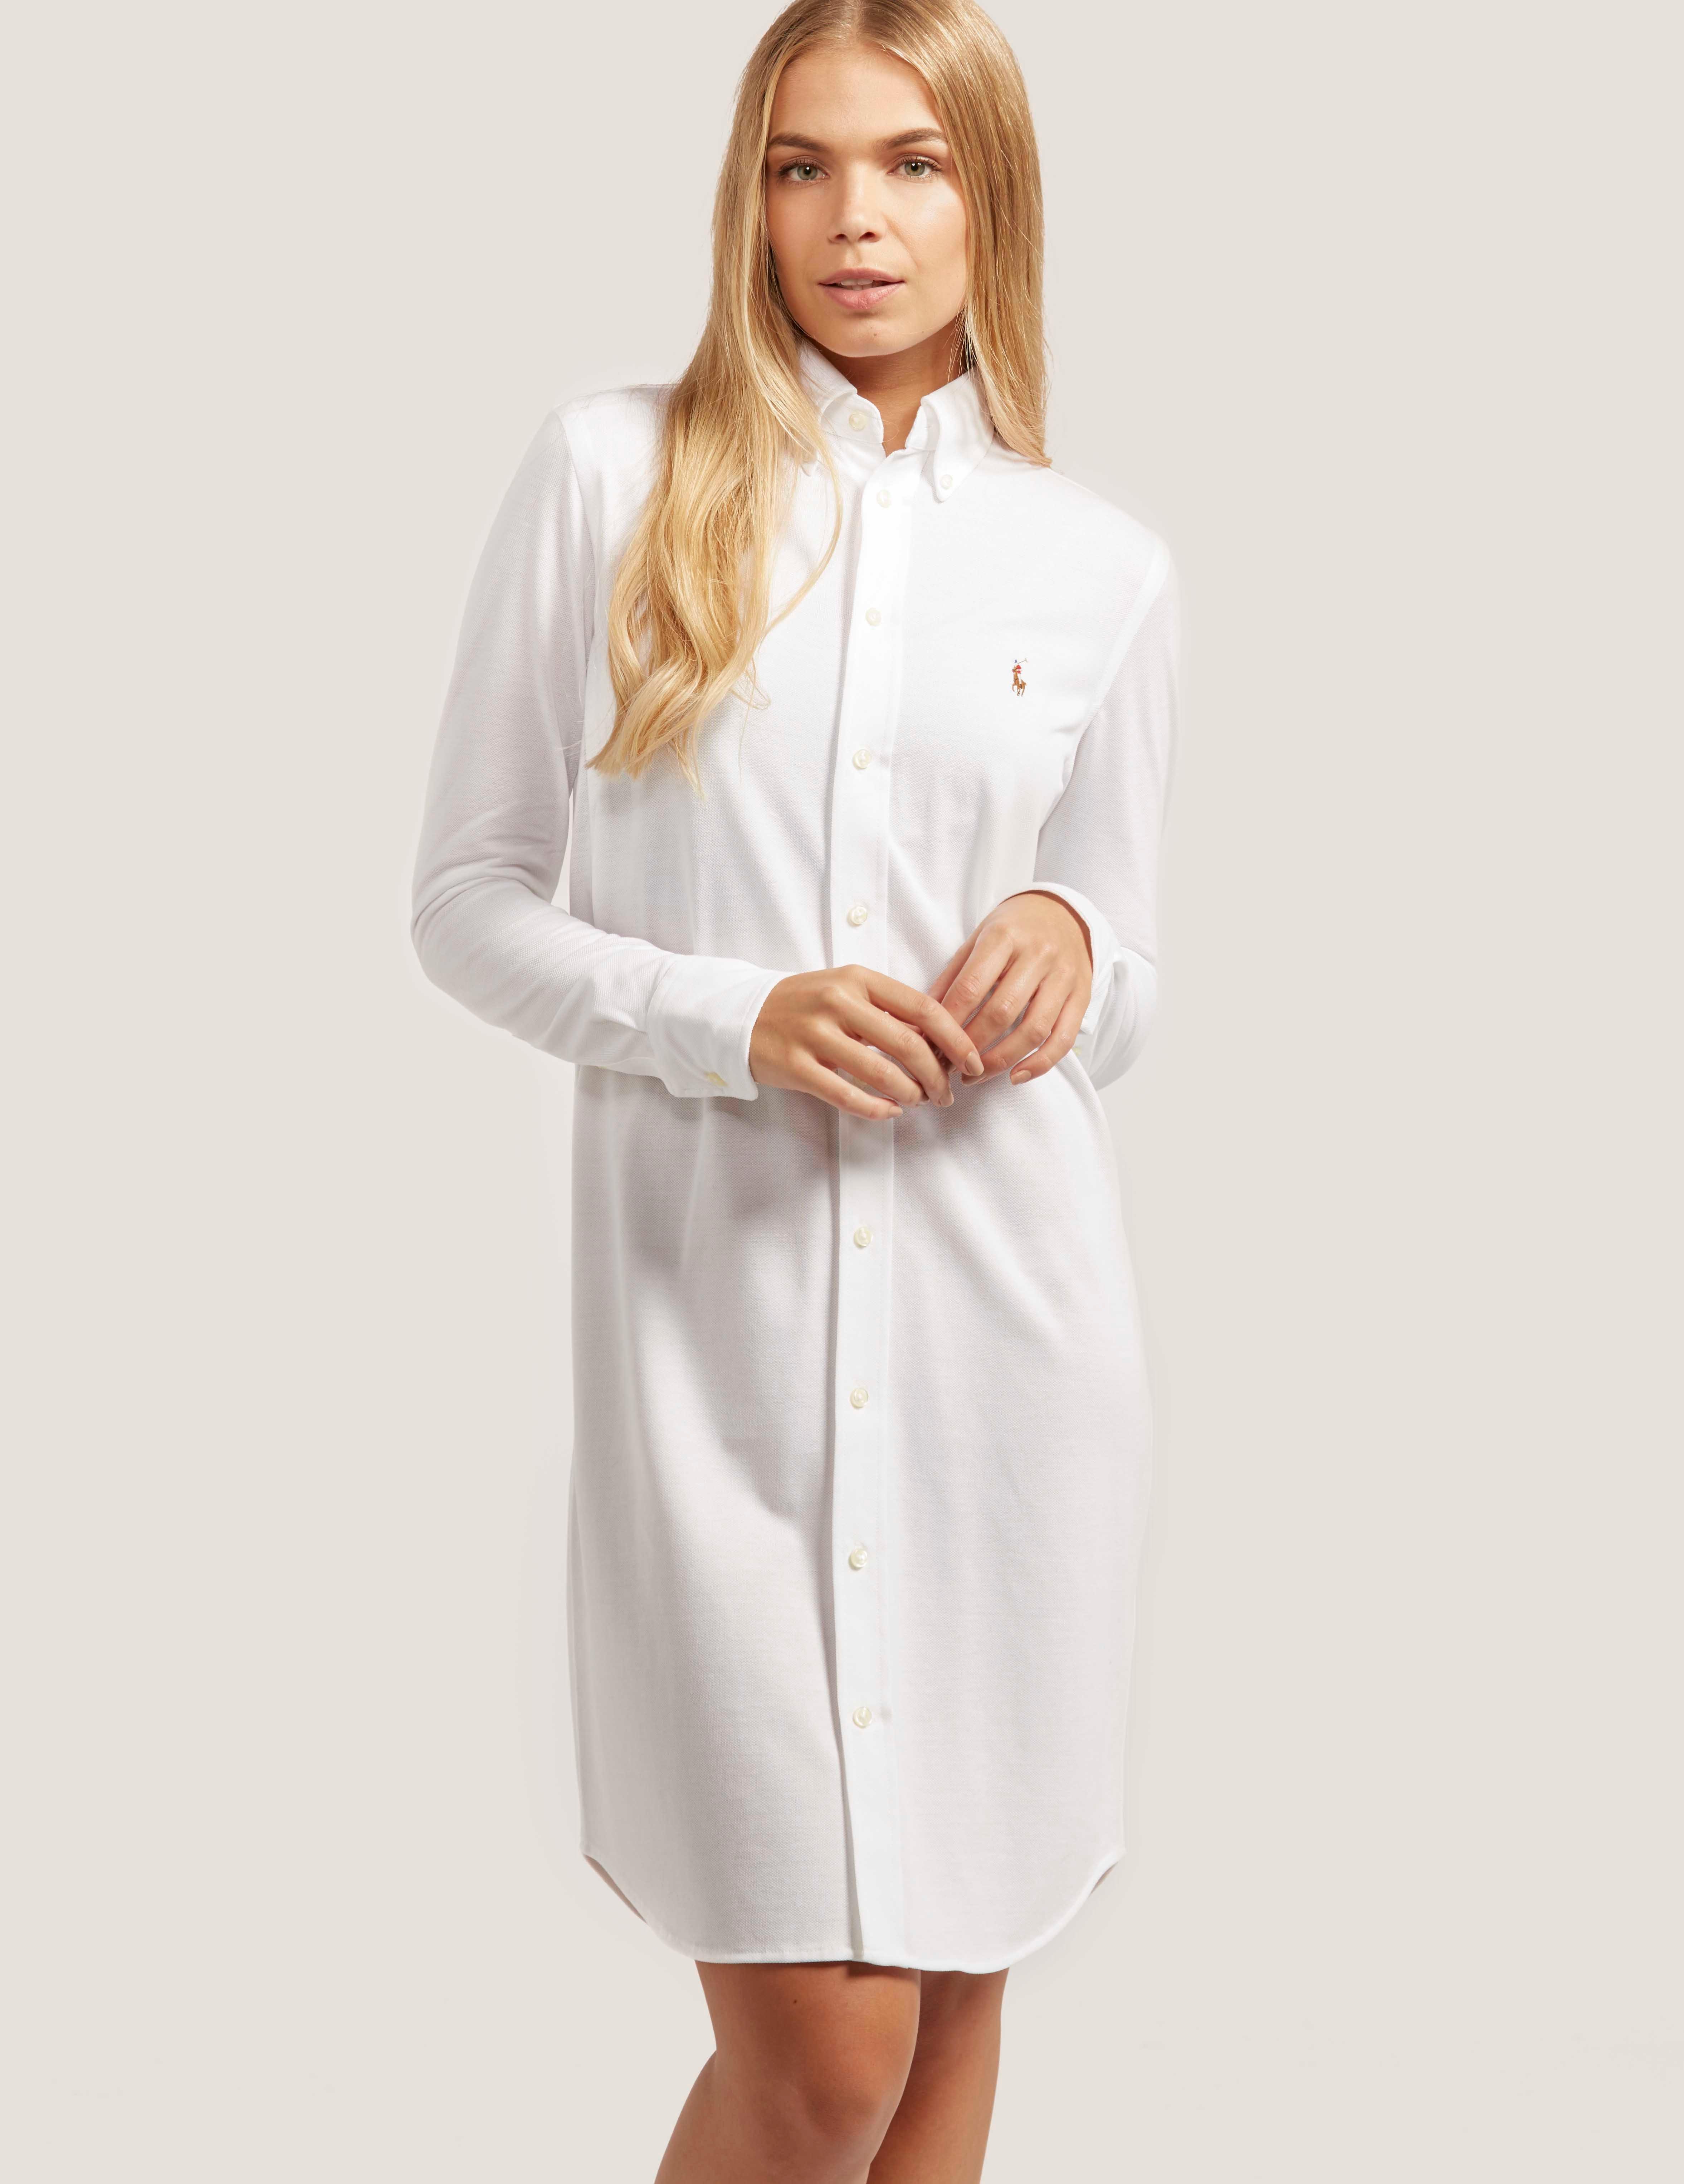 Lyst Polo Ralph  Lauren  Heidi Shirt  Dress  in White 